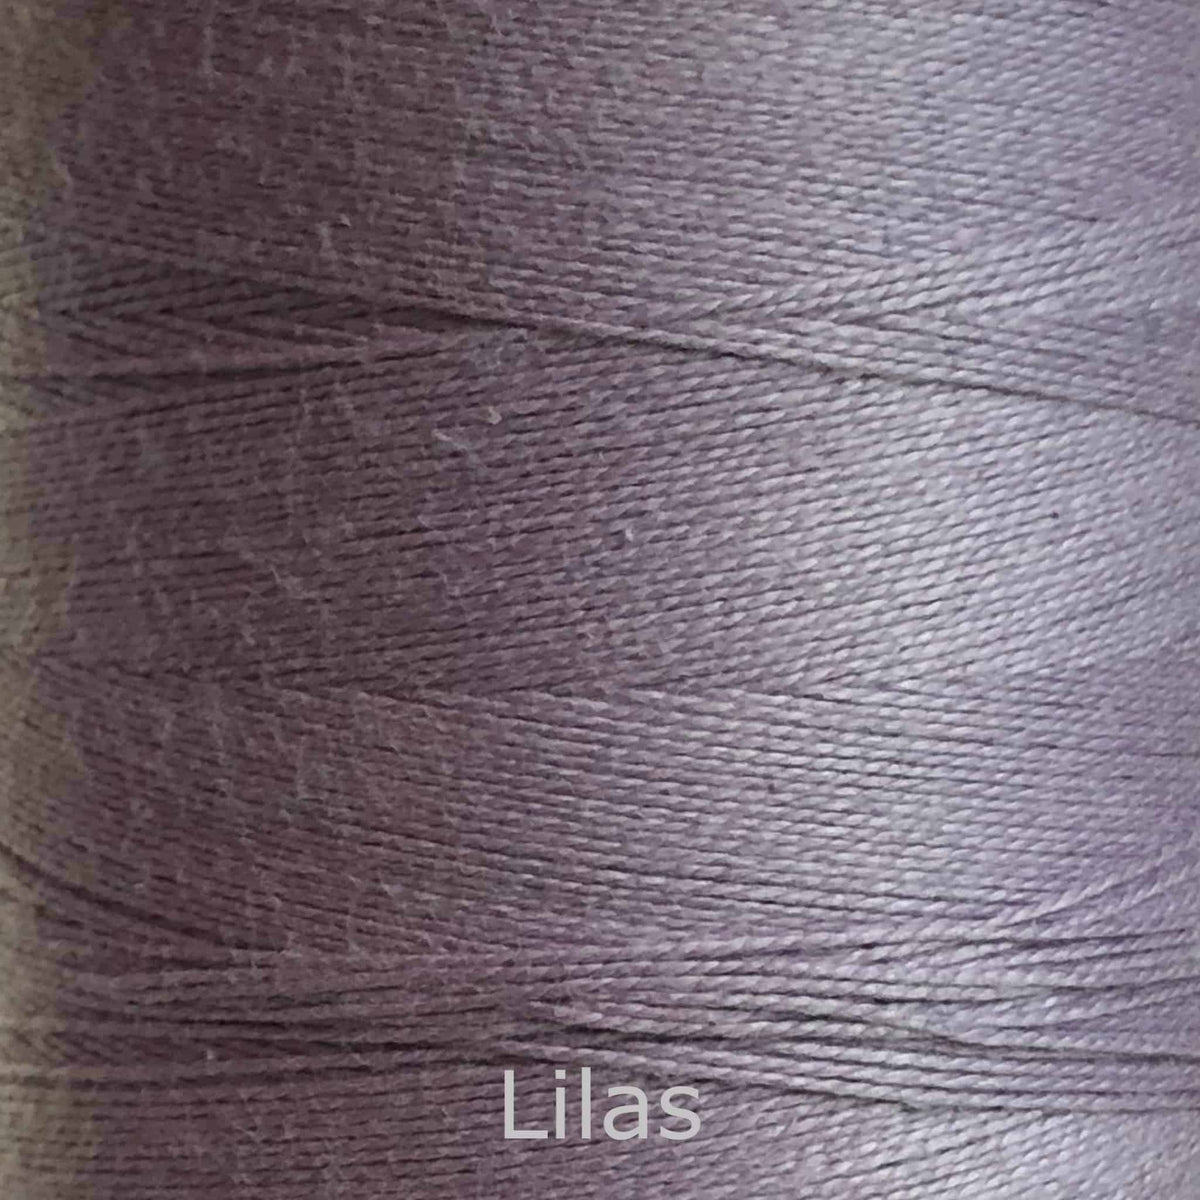 16/2 cotton weaving yarn lilas